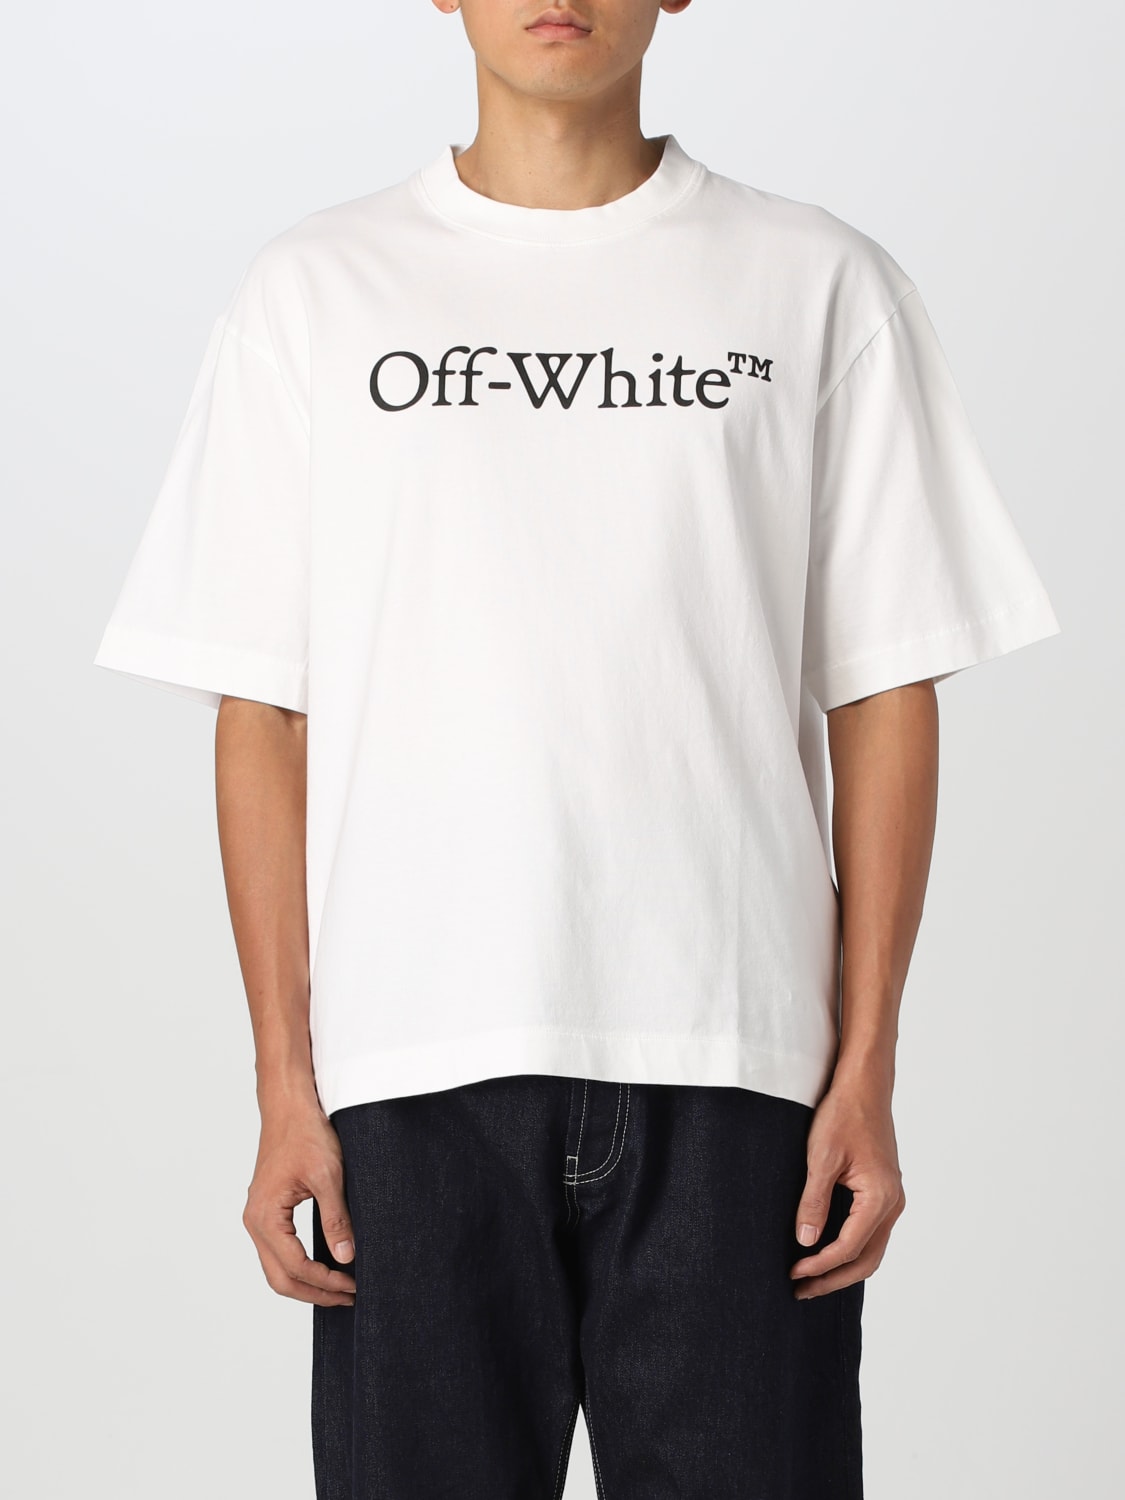 off-white tee tシャツ - www.sorbillomenu.com